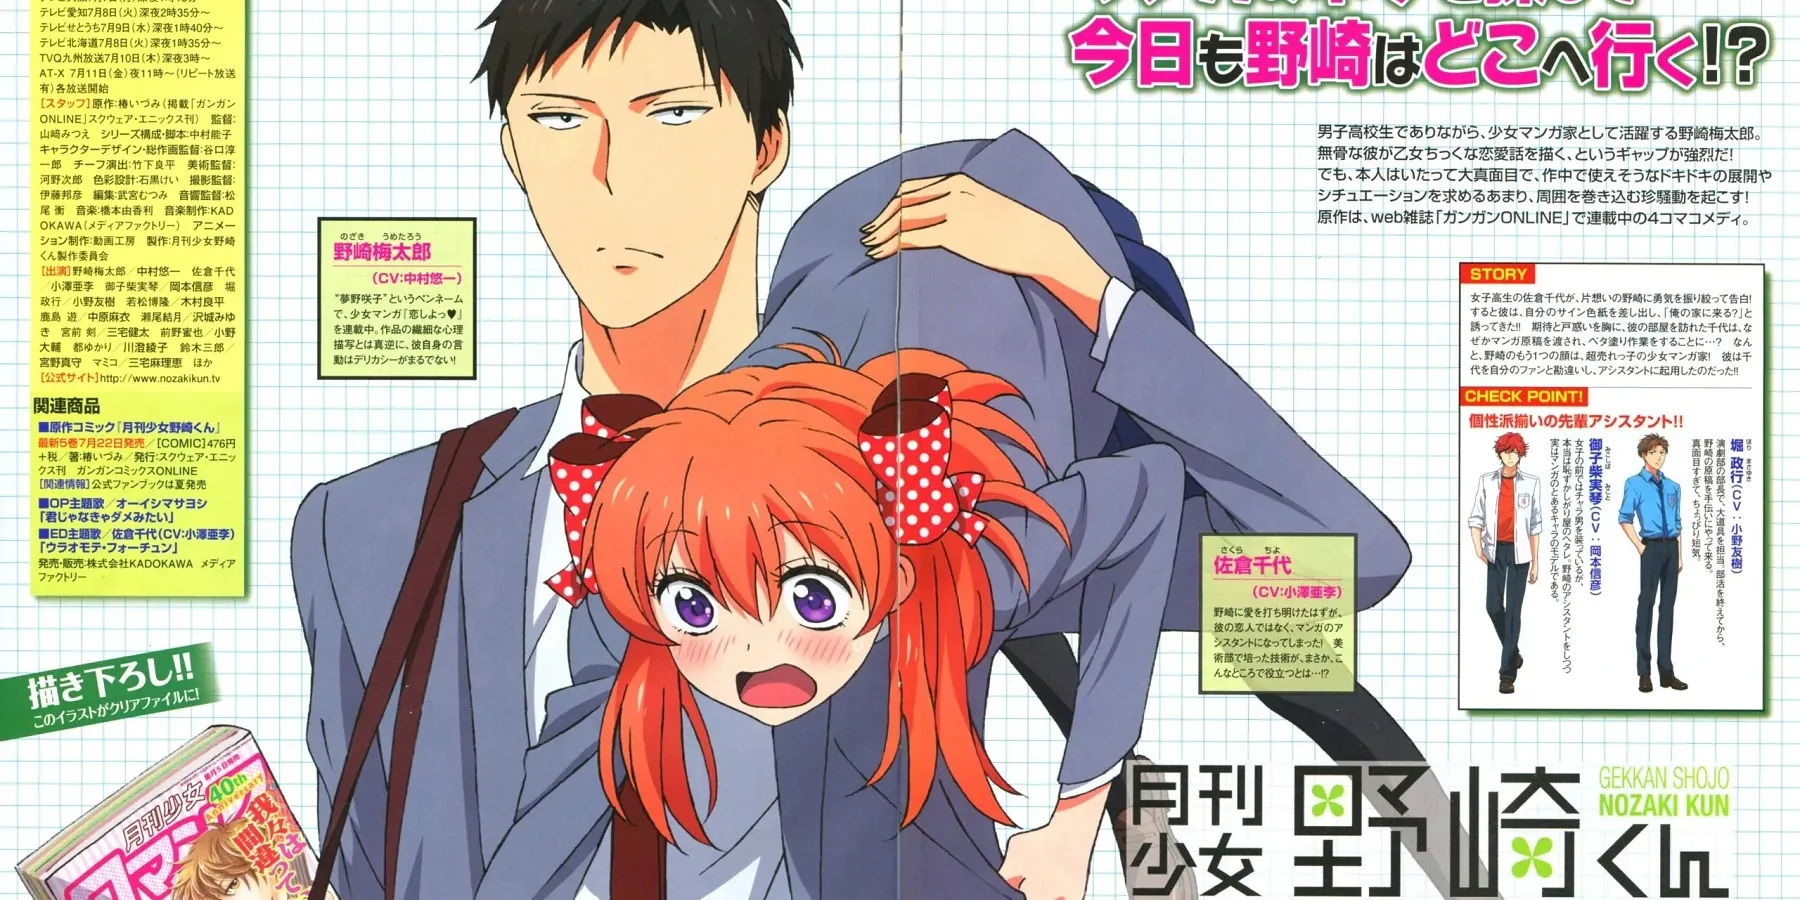 Flawed Romance Manga Protagonists - Monthly Girls’ Nozaki-kun